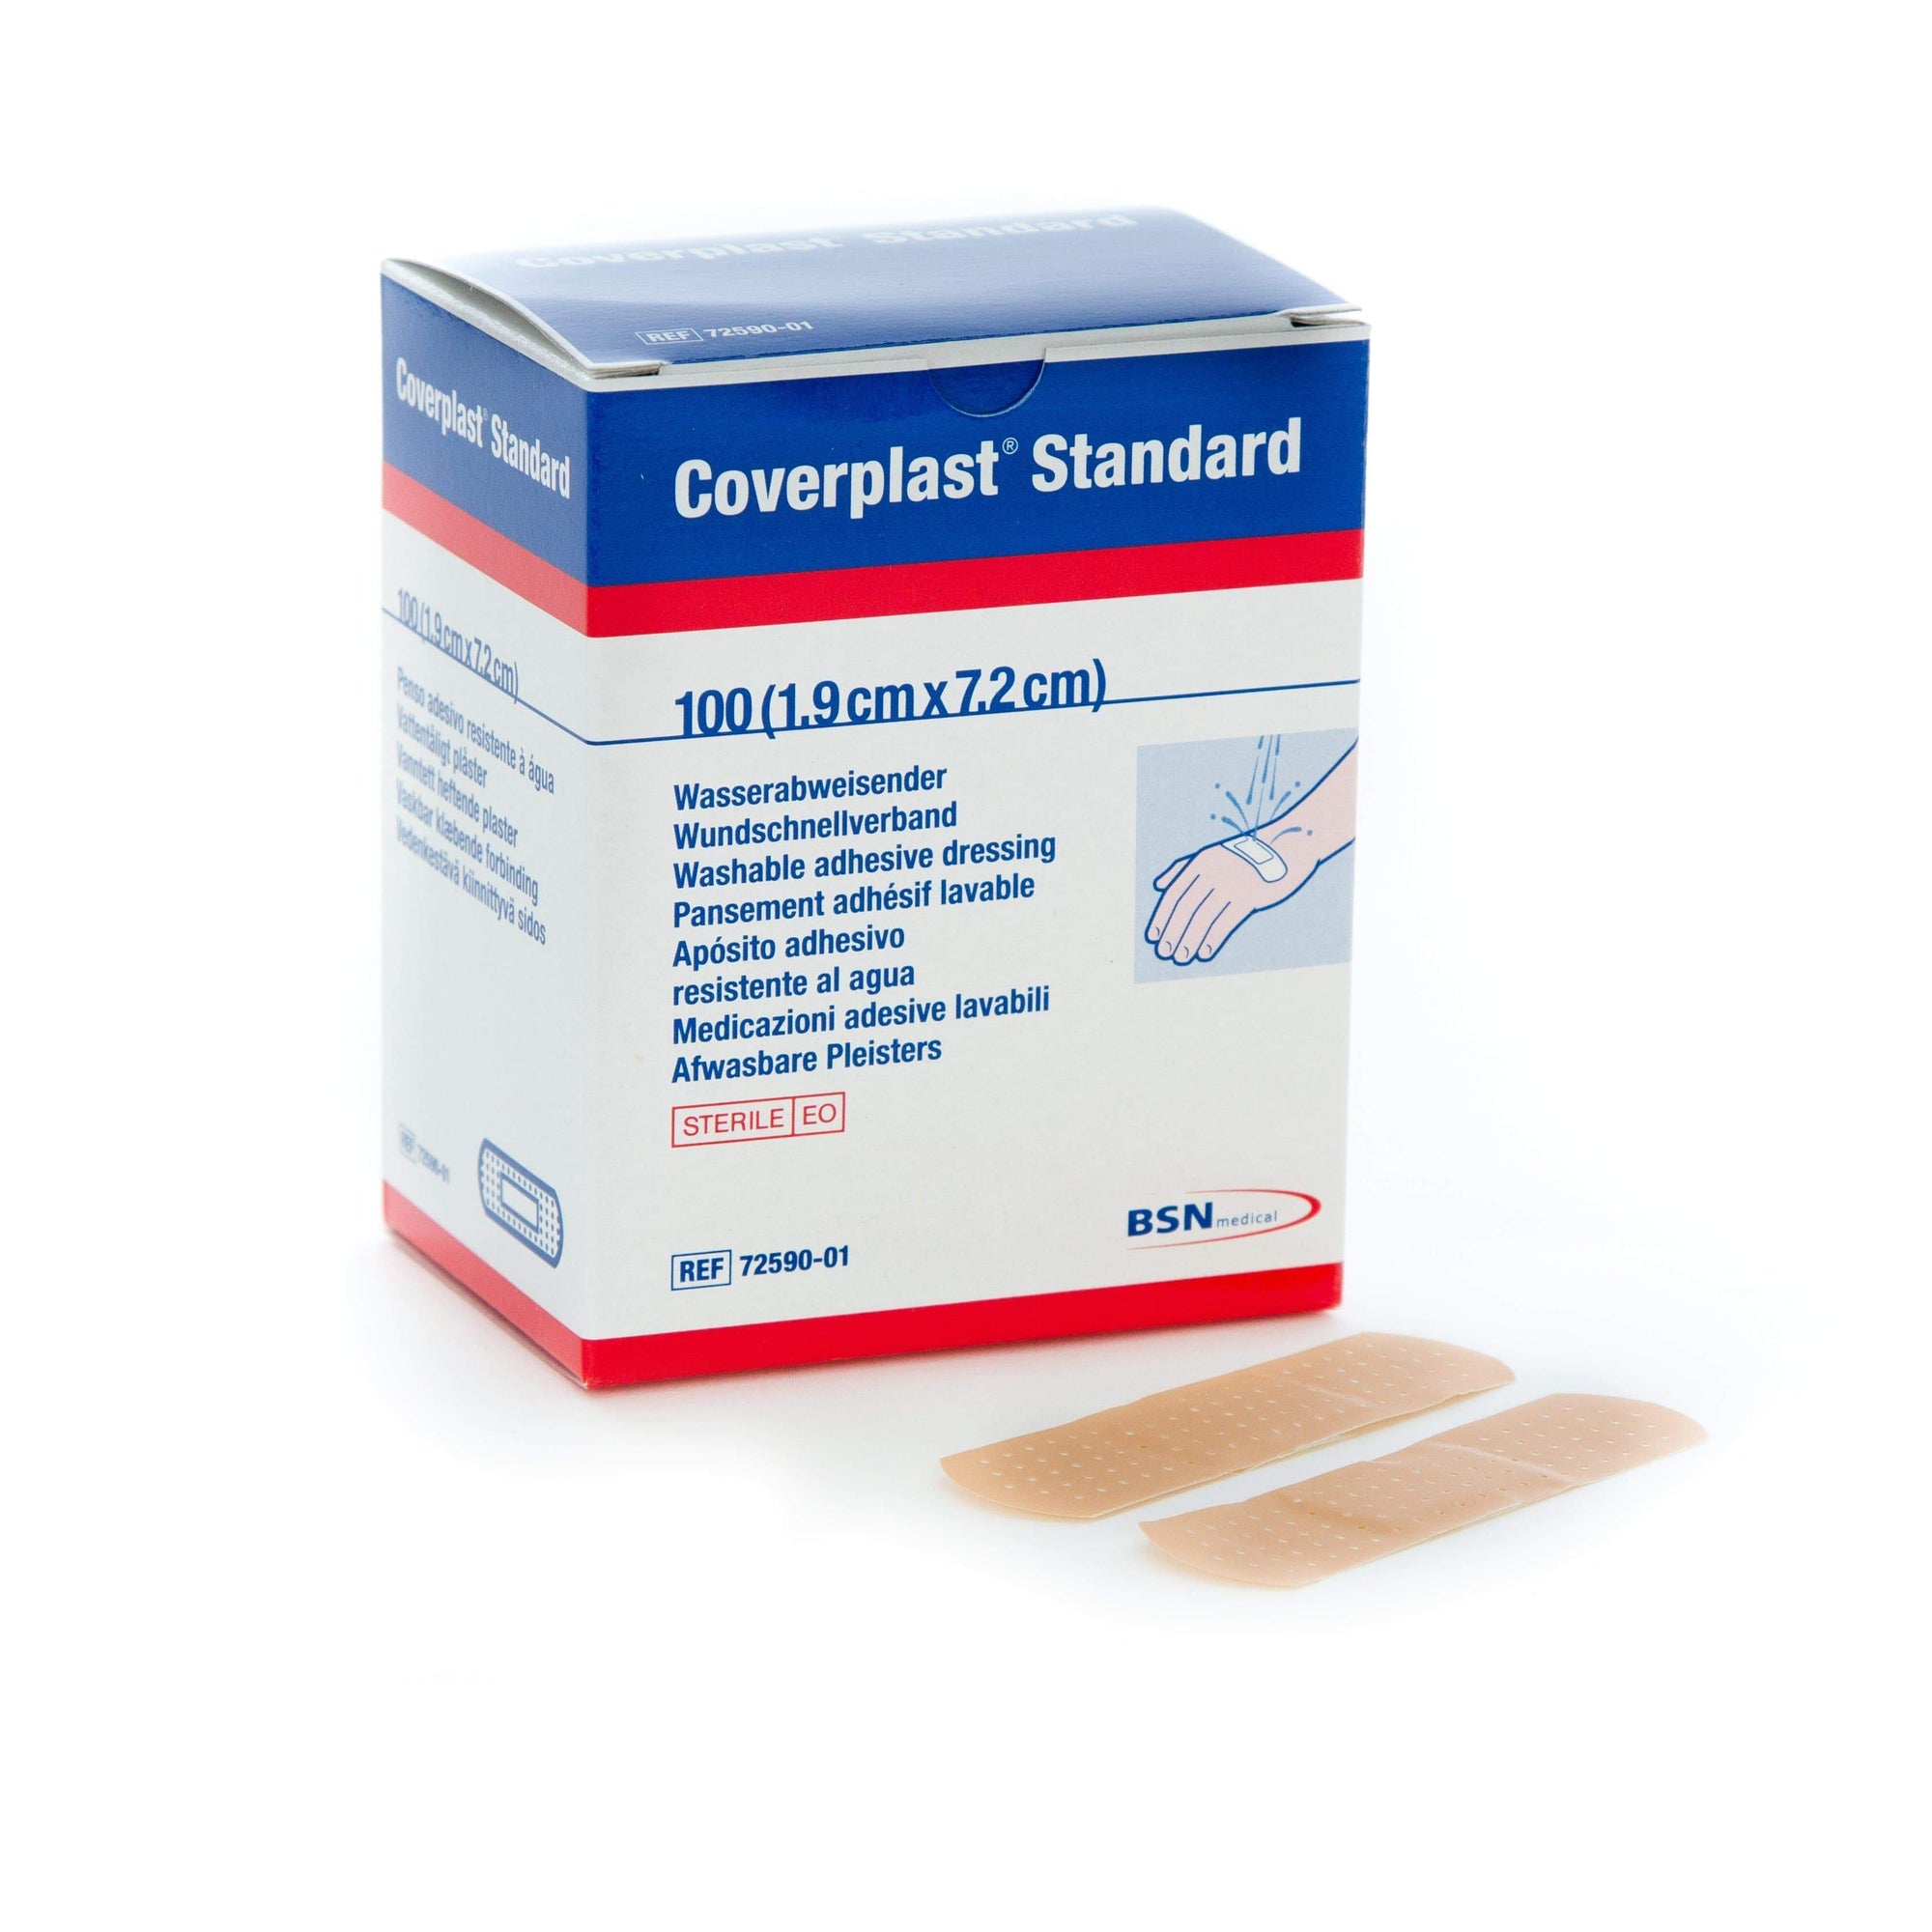 BSN Medical Coverplast Standard